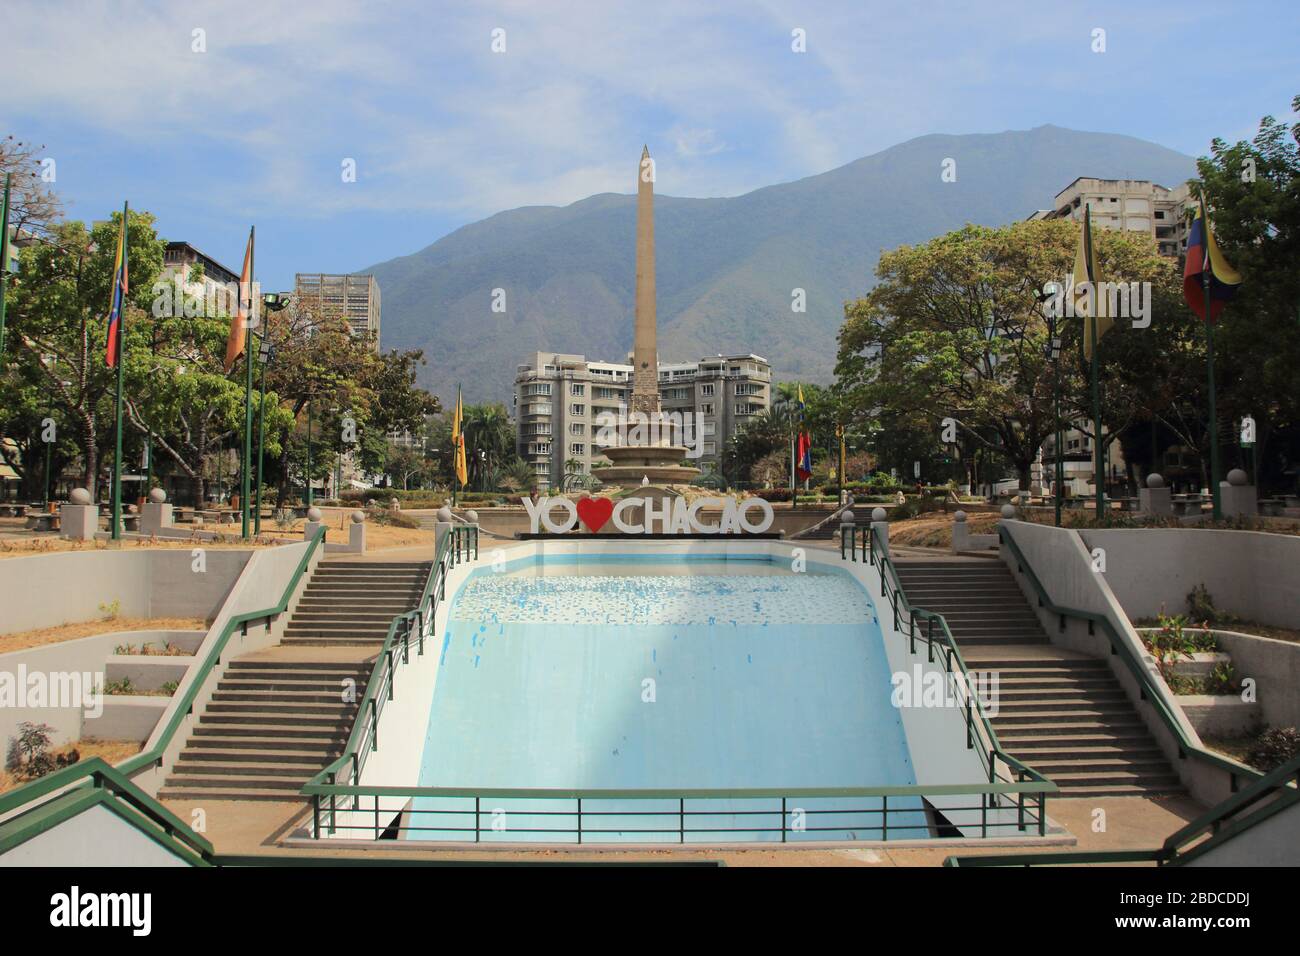 Caracas, Venezuela 31. März 2020: Francia-Platz (auch Altamira-Platz genannt), in Caracas, Hauptstadt Venezuelas leer nach Quarantäne Stockfoto